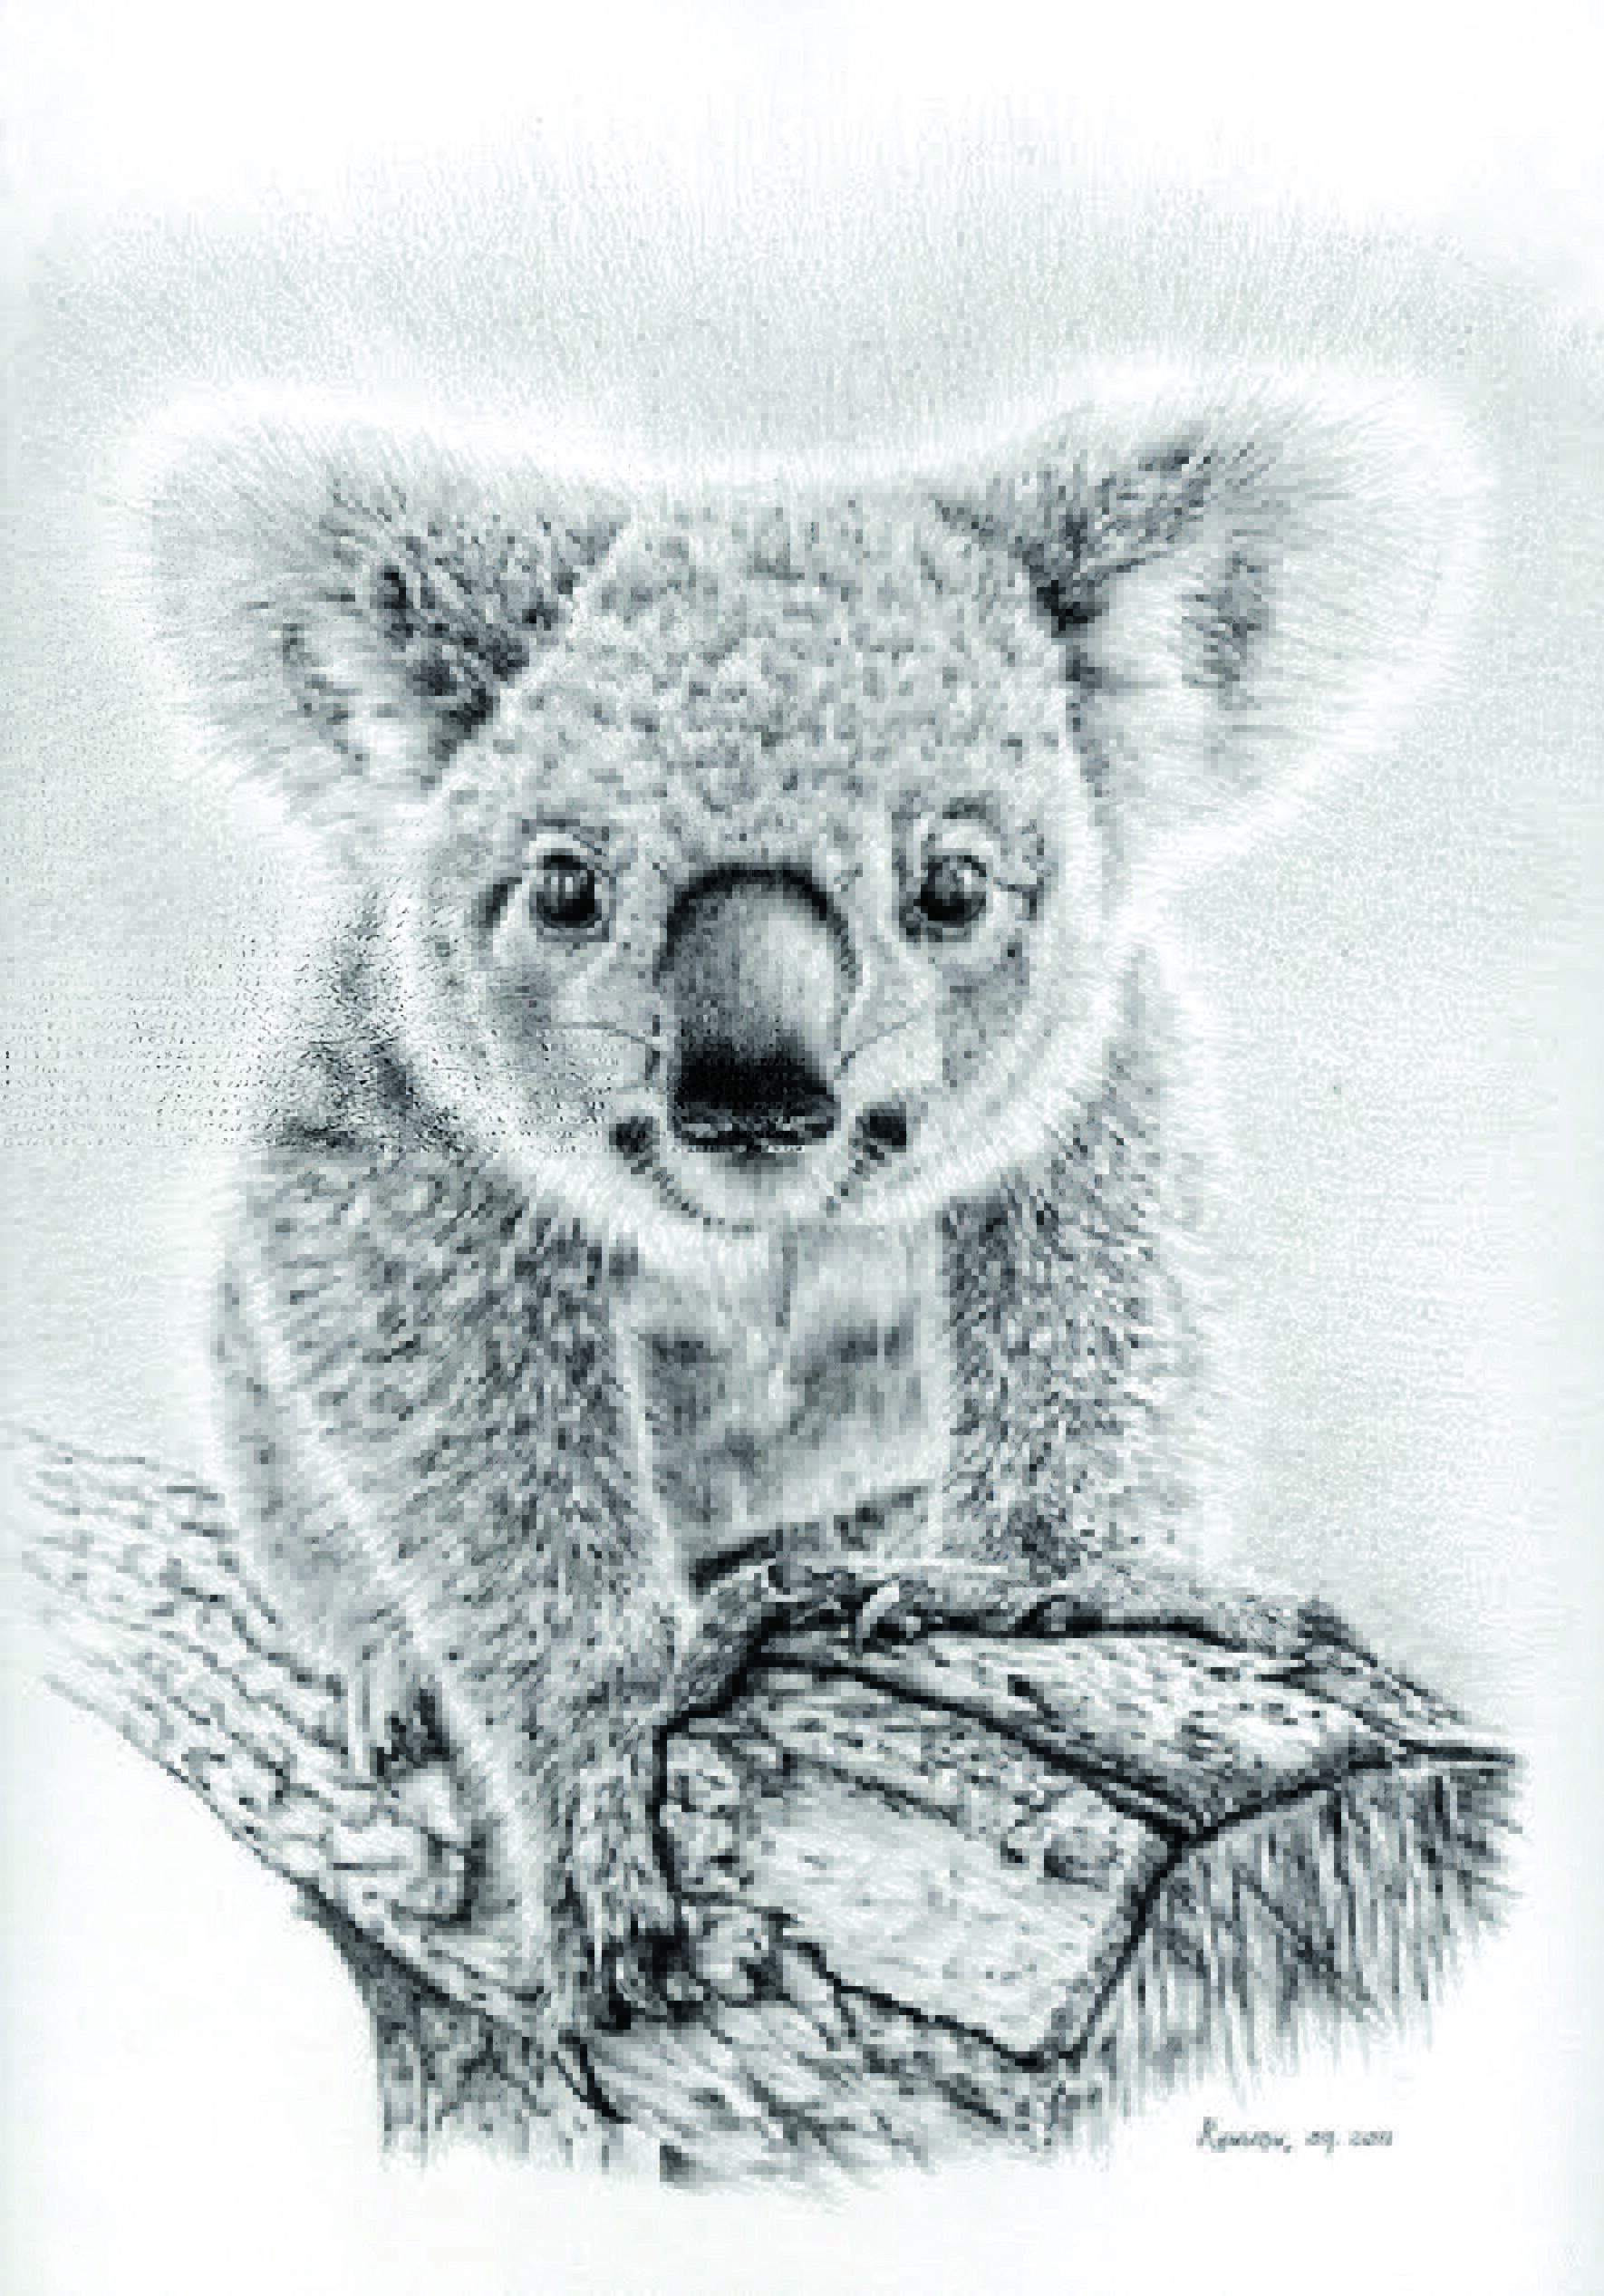 Hannah Precious Portraits - Quick #koala sketch this evening. #australia  #animal #cute #nature #art #artist #drawing #sketch #draw #sweet  #sketchbook #doodle #mammal #wildlife #conservation